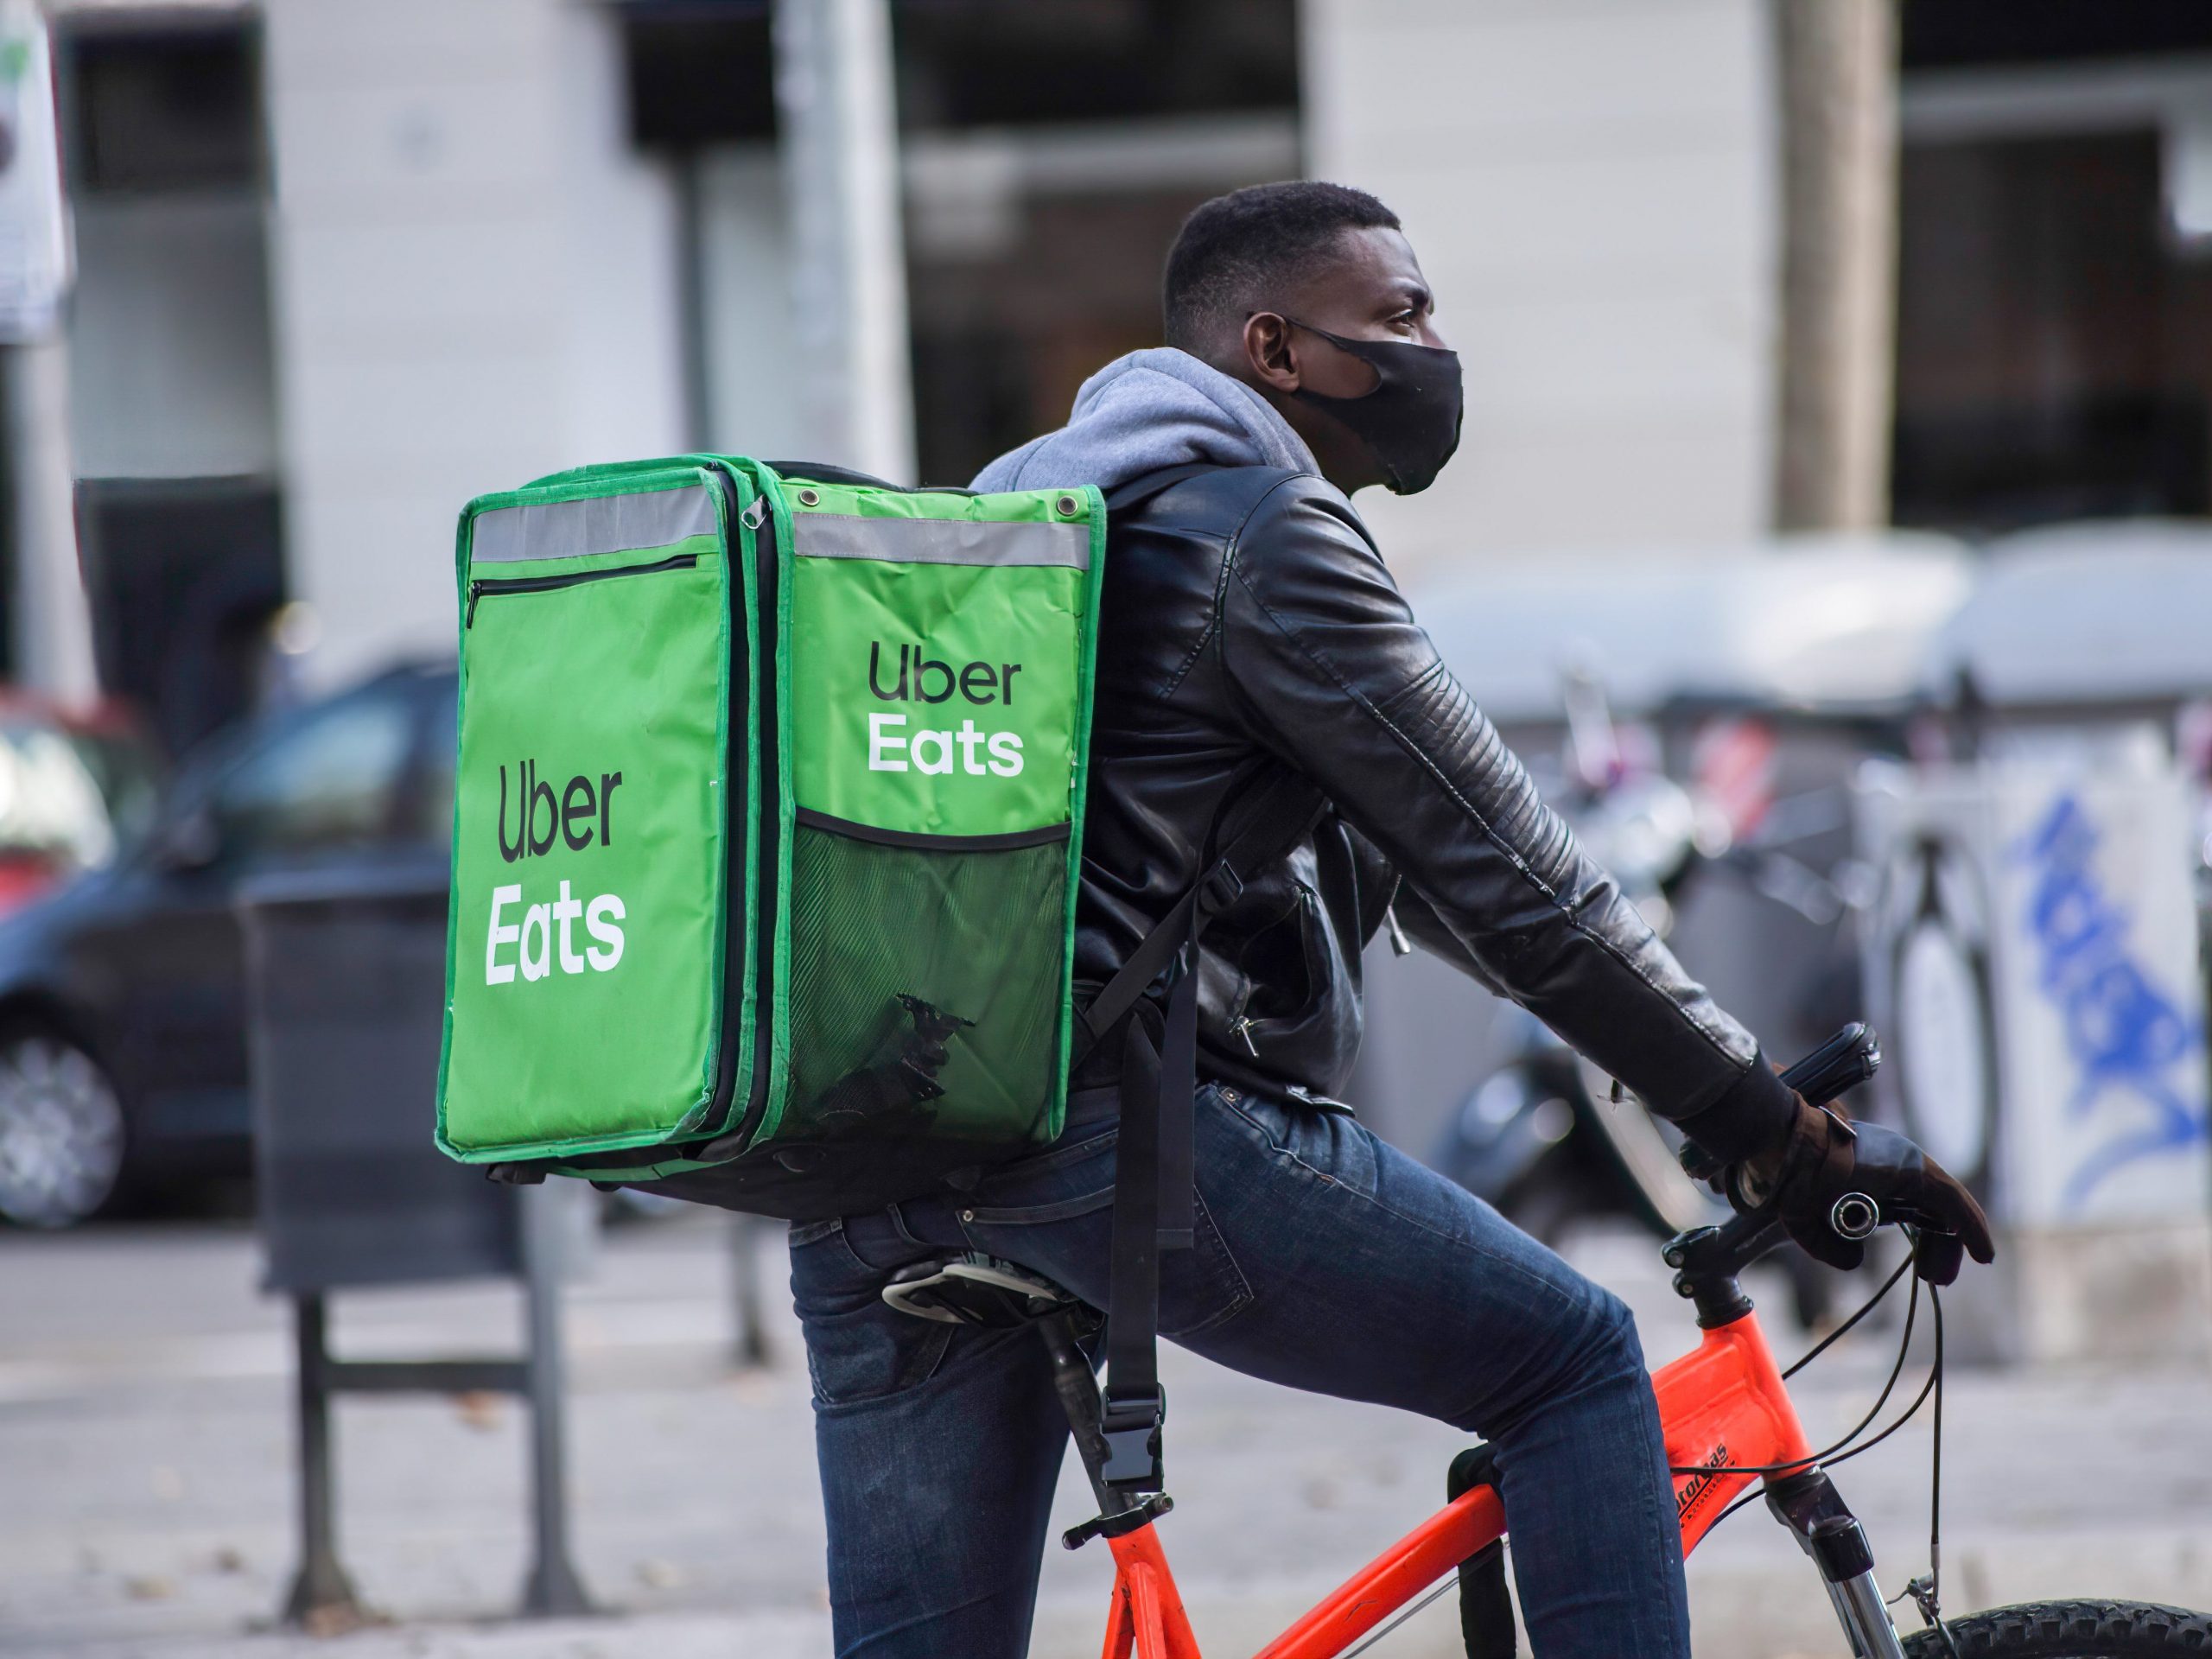 Uber Eats delivery driver on bike